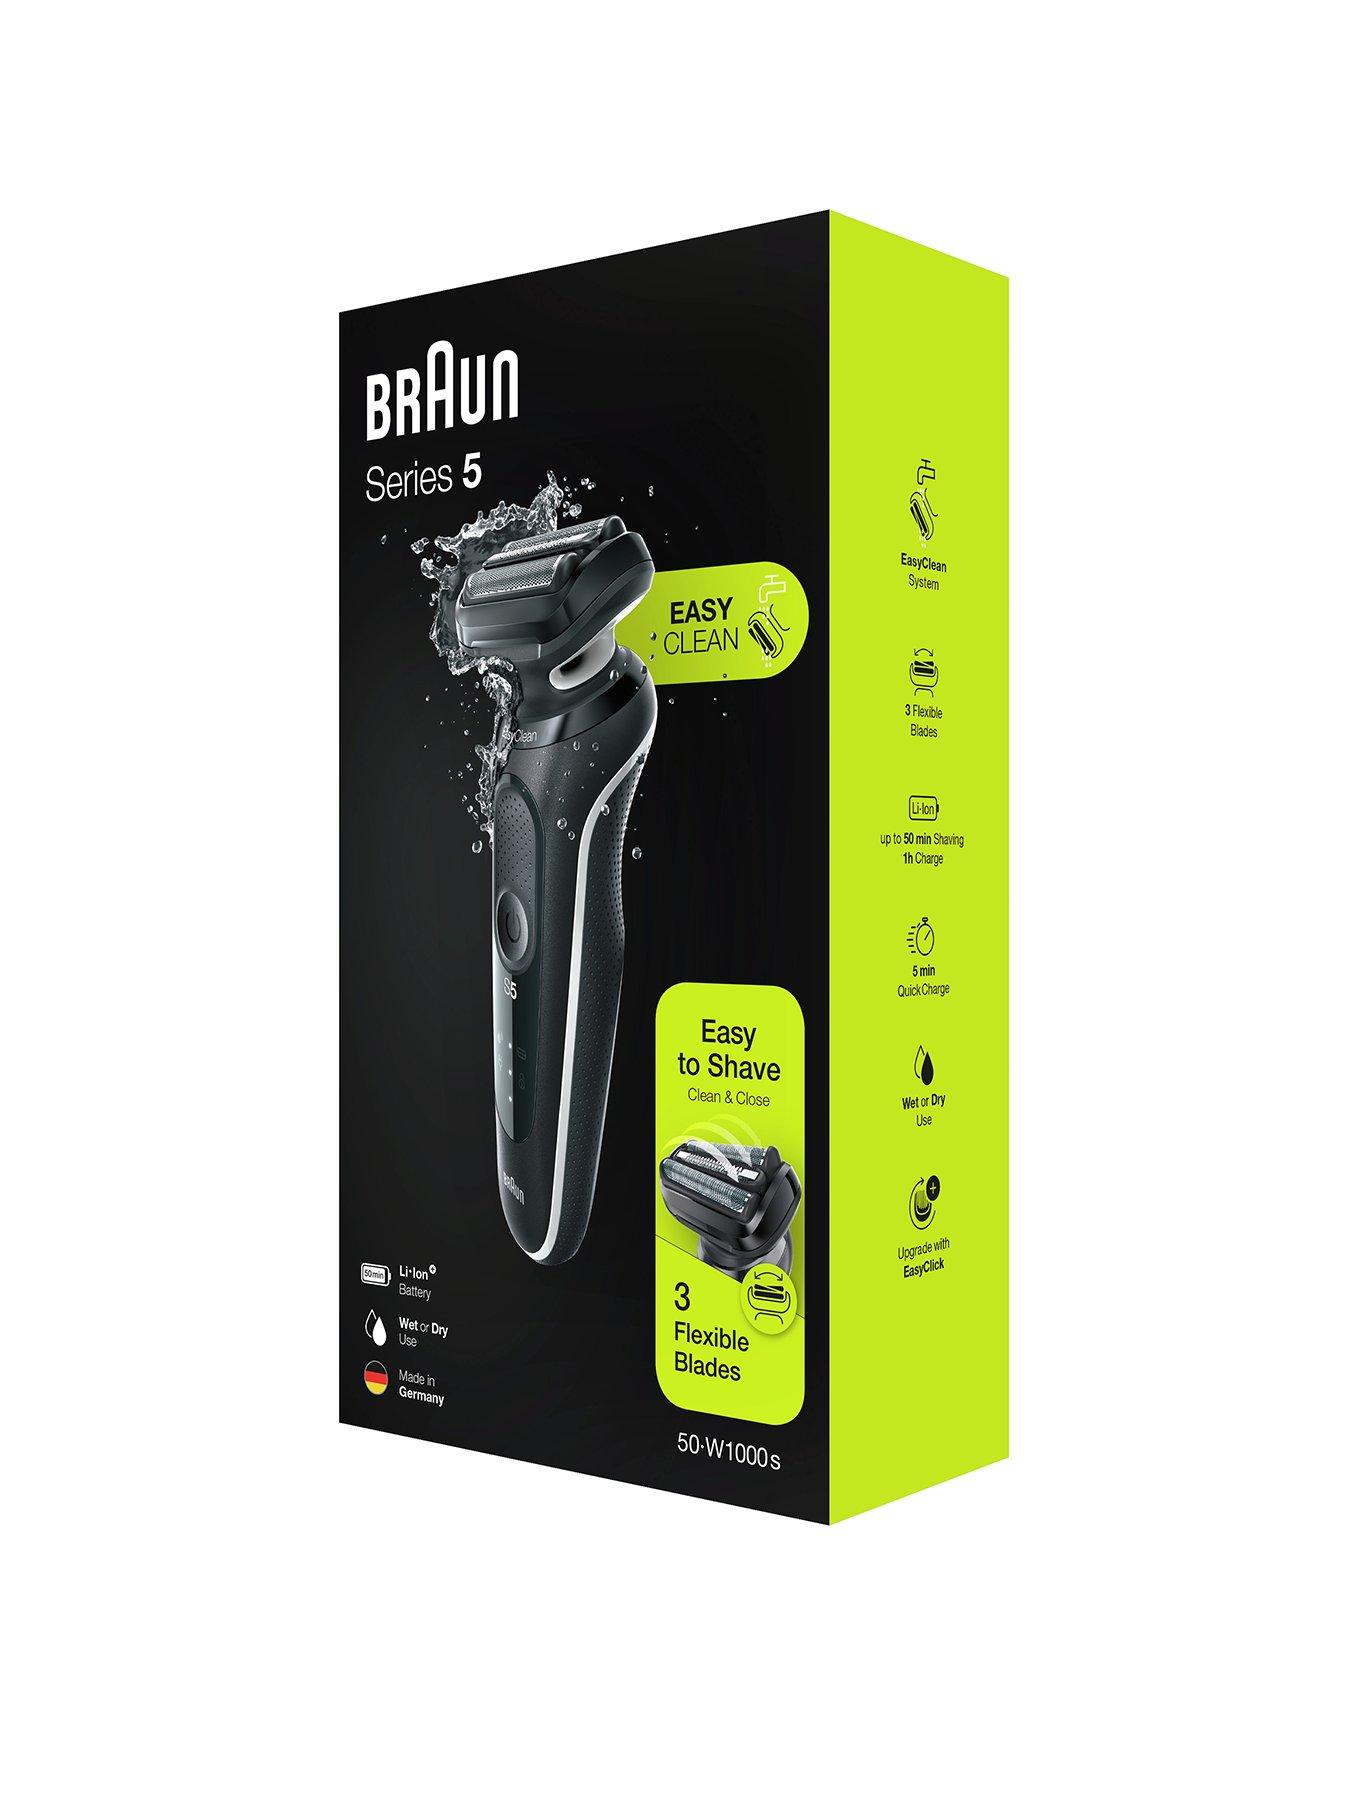 Compre Braun Series 3 Electric Shaver Razor Triple Foil Flexible